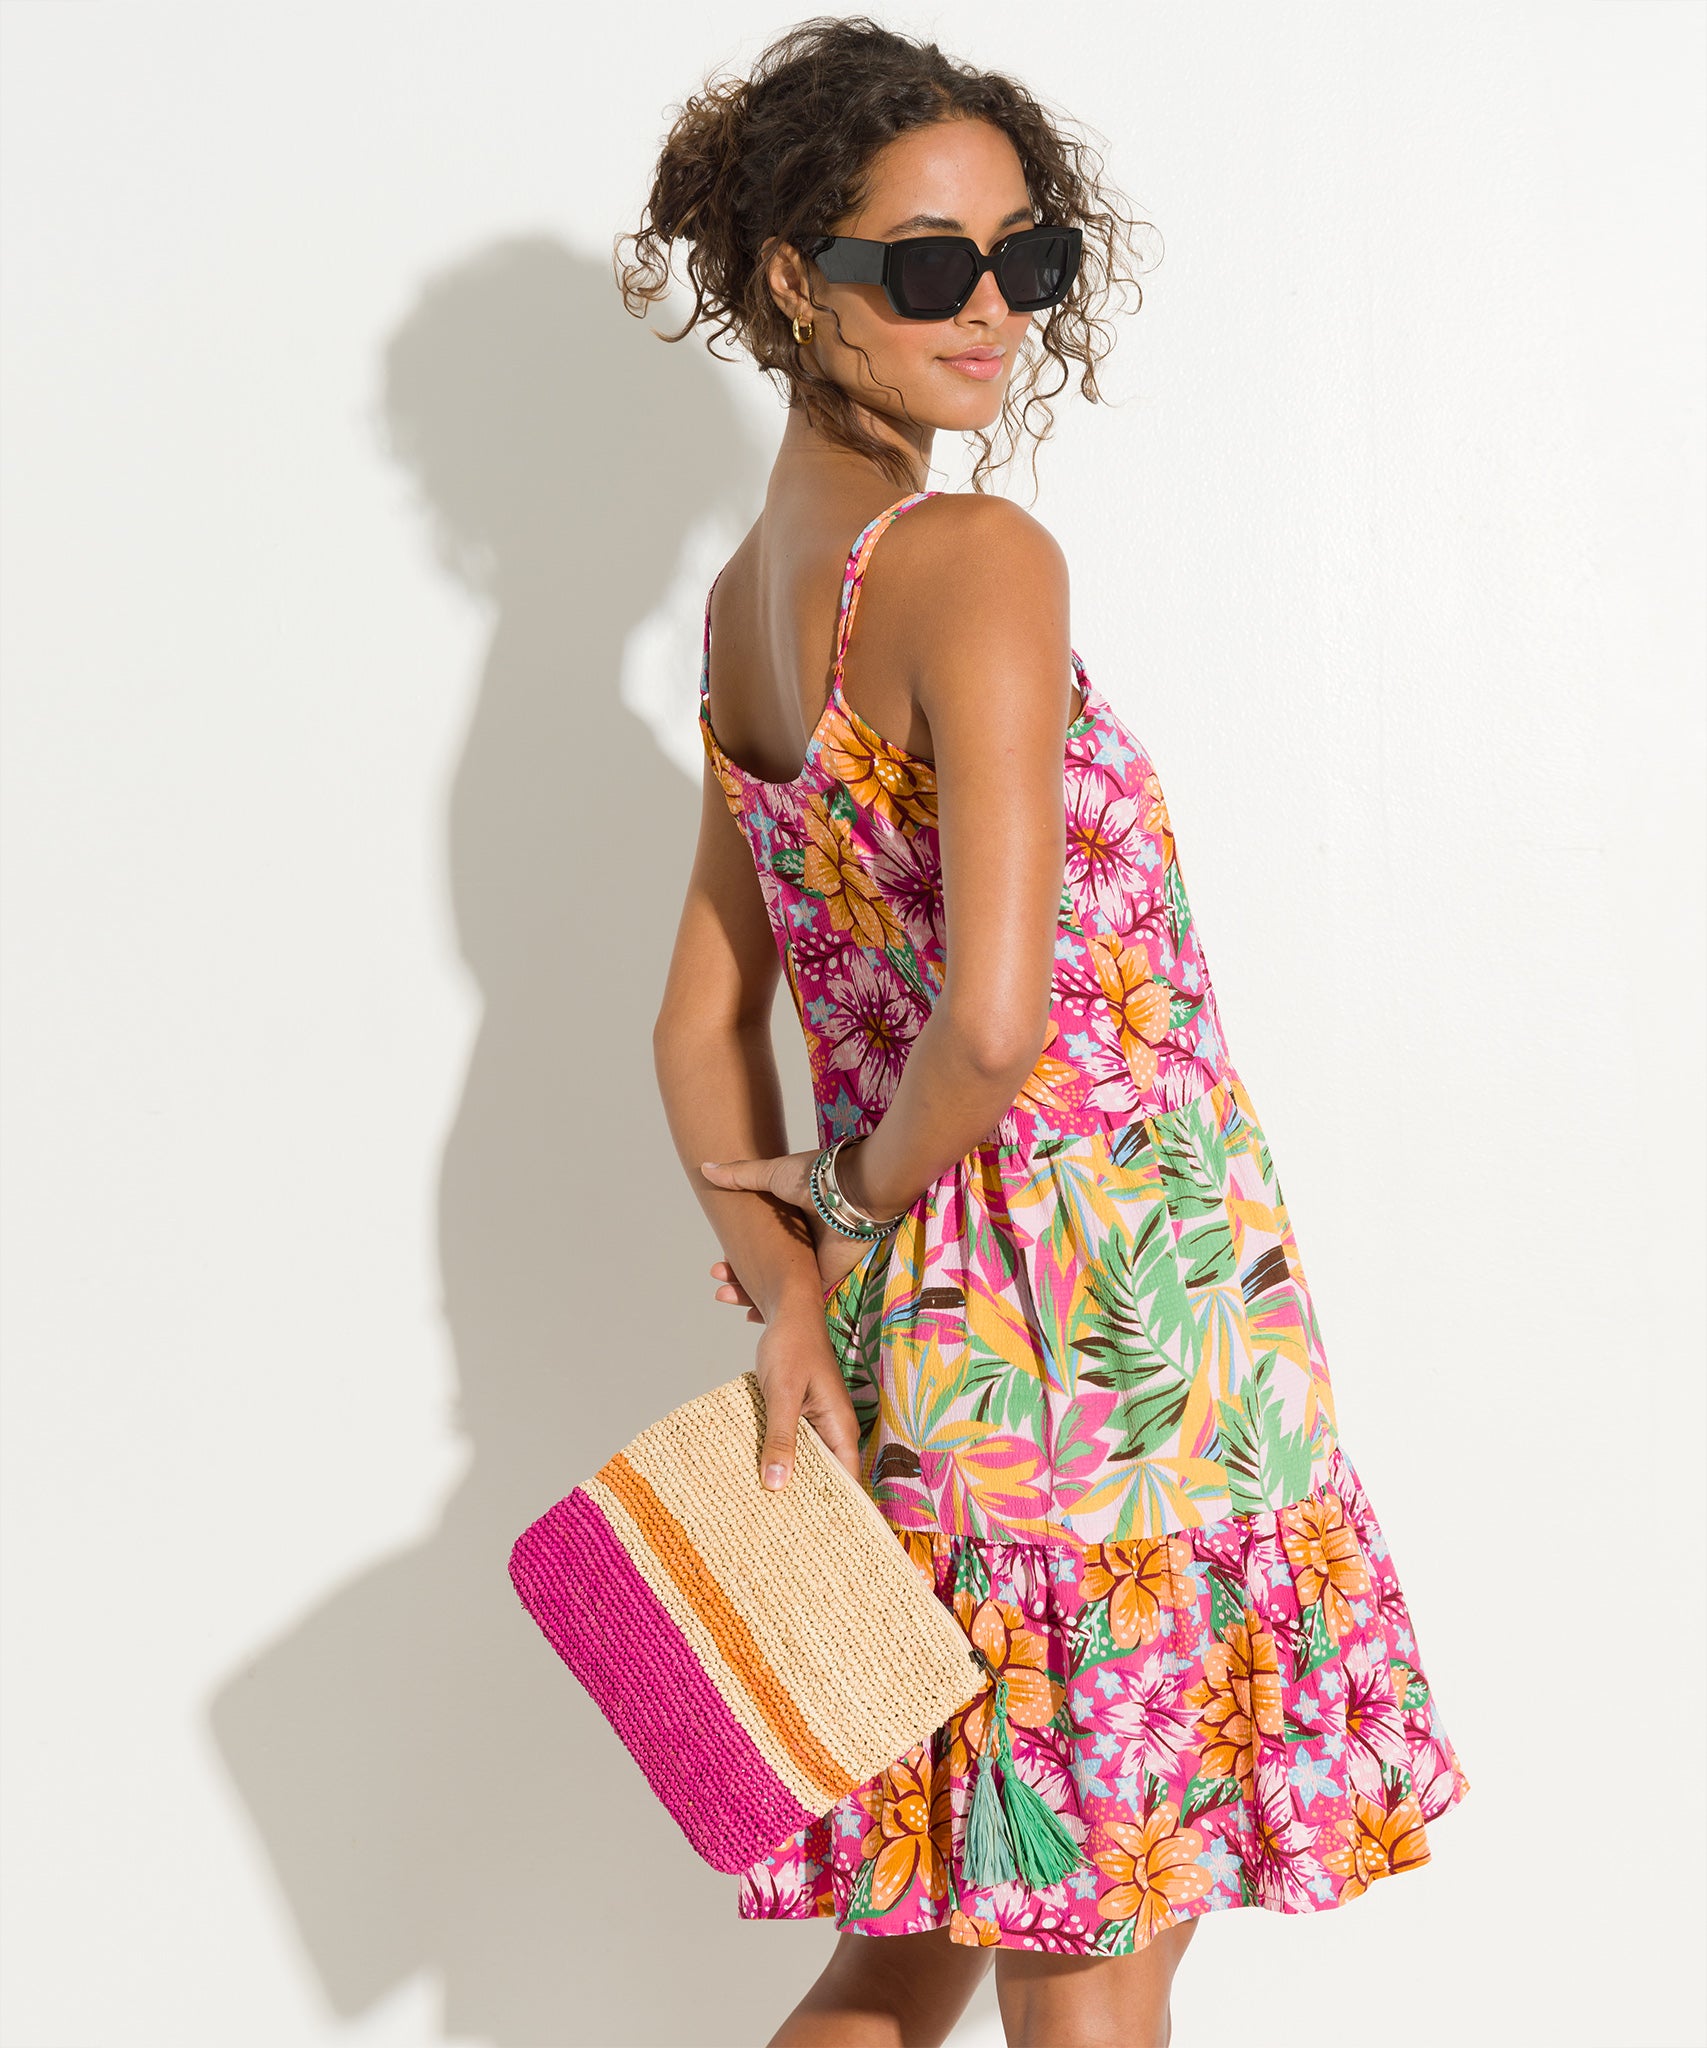 Lanai Slip Dress in color Hibiscus on model